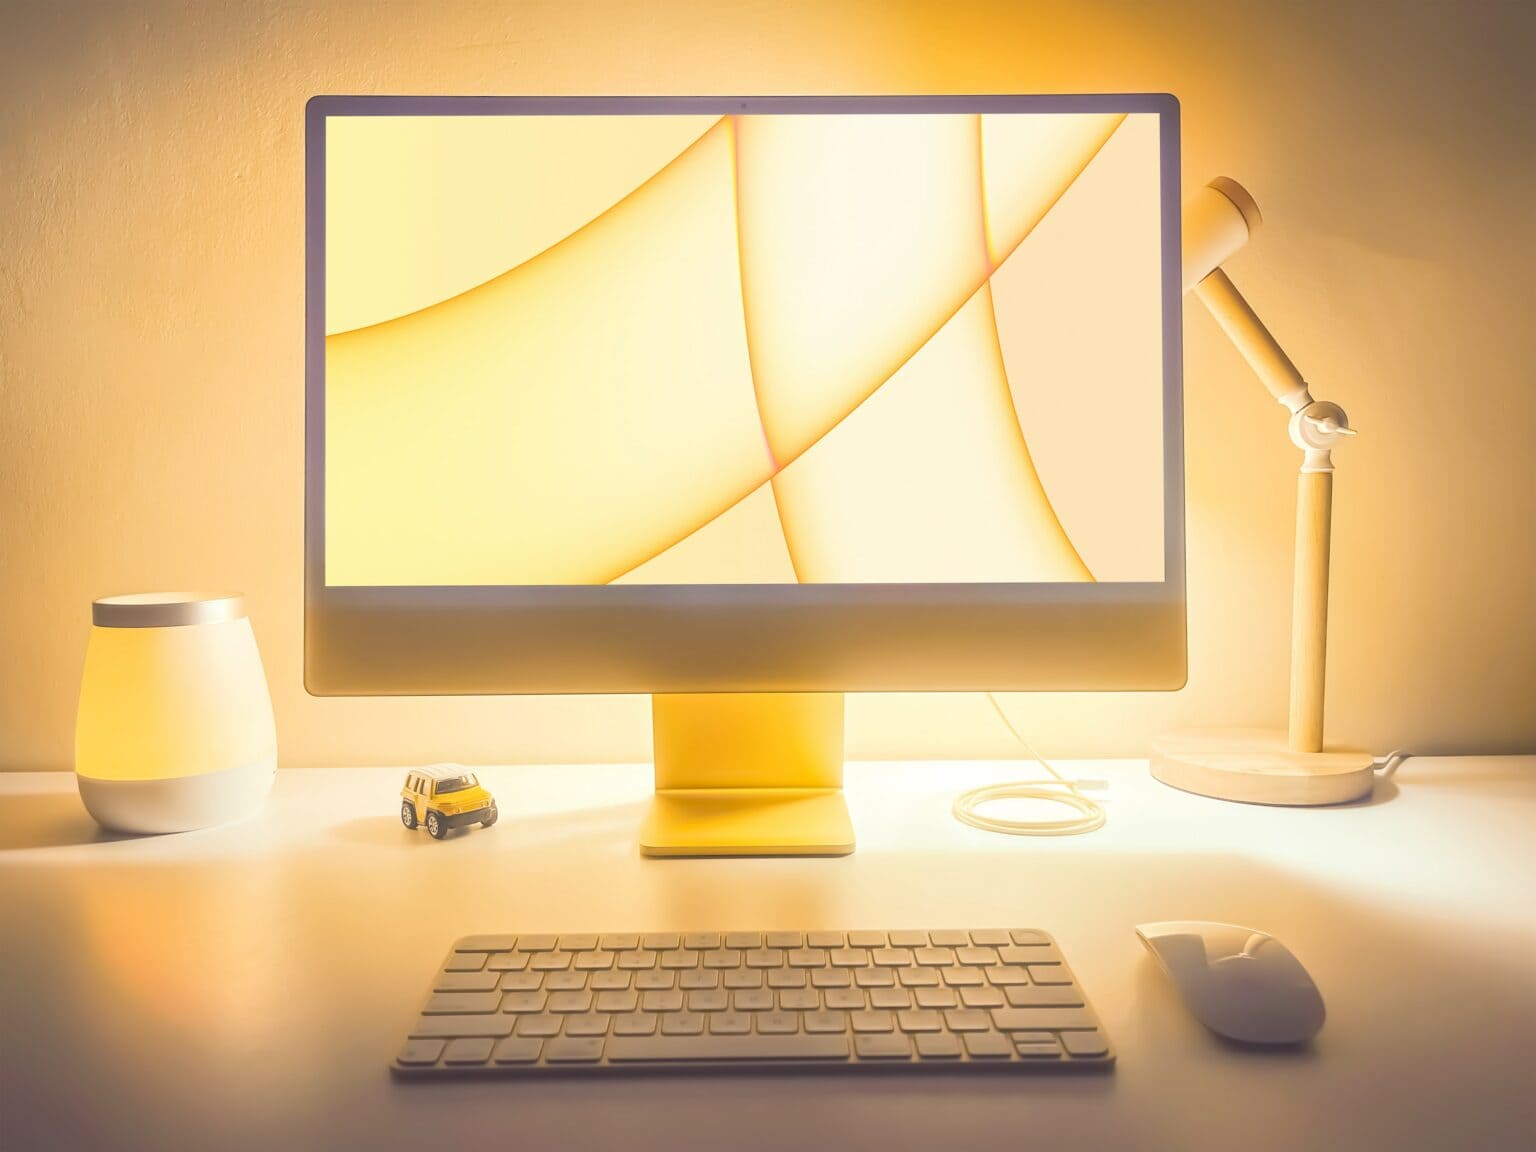 M1 iMac with yellow light